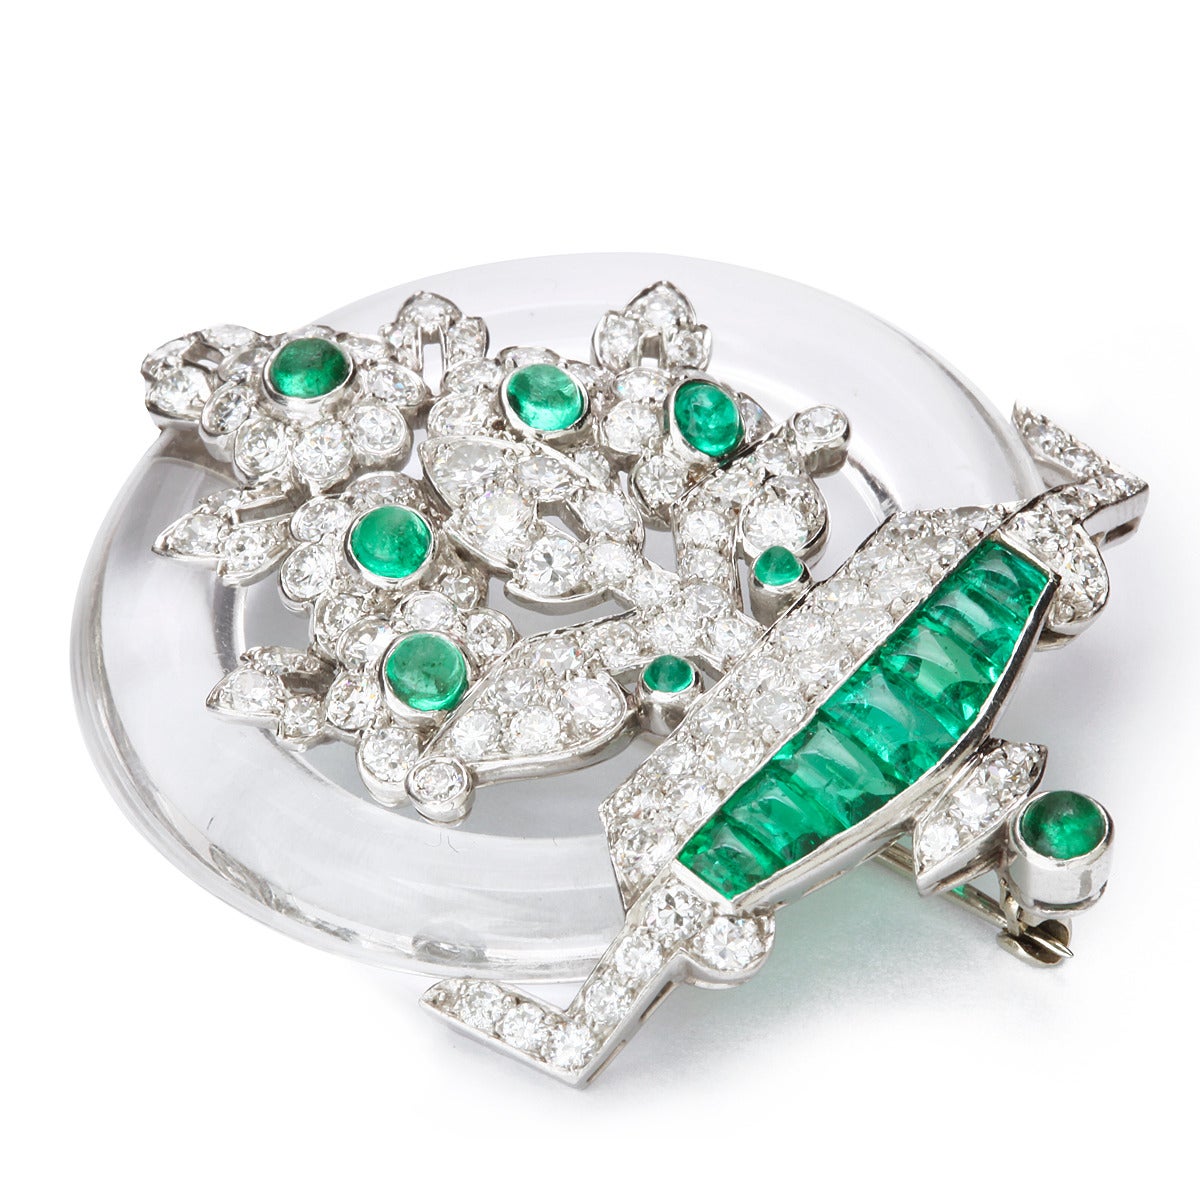 Art Deco rock crystal, emerald, and diamond circular brooch, set in platinum.

American, ca. 1935.
Length: 1 3/4 inches